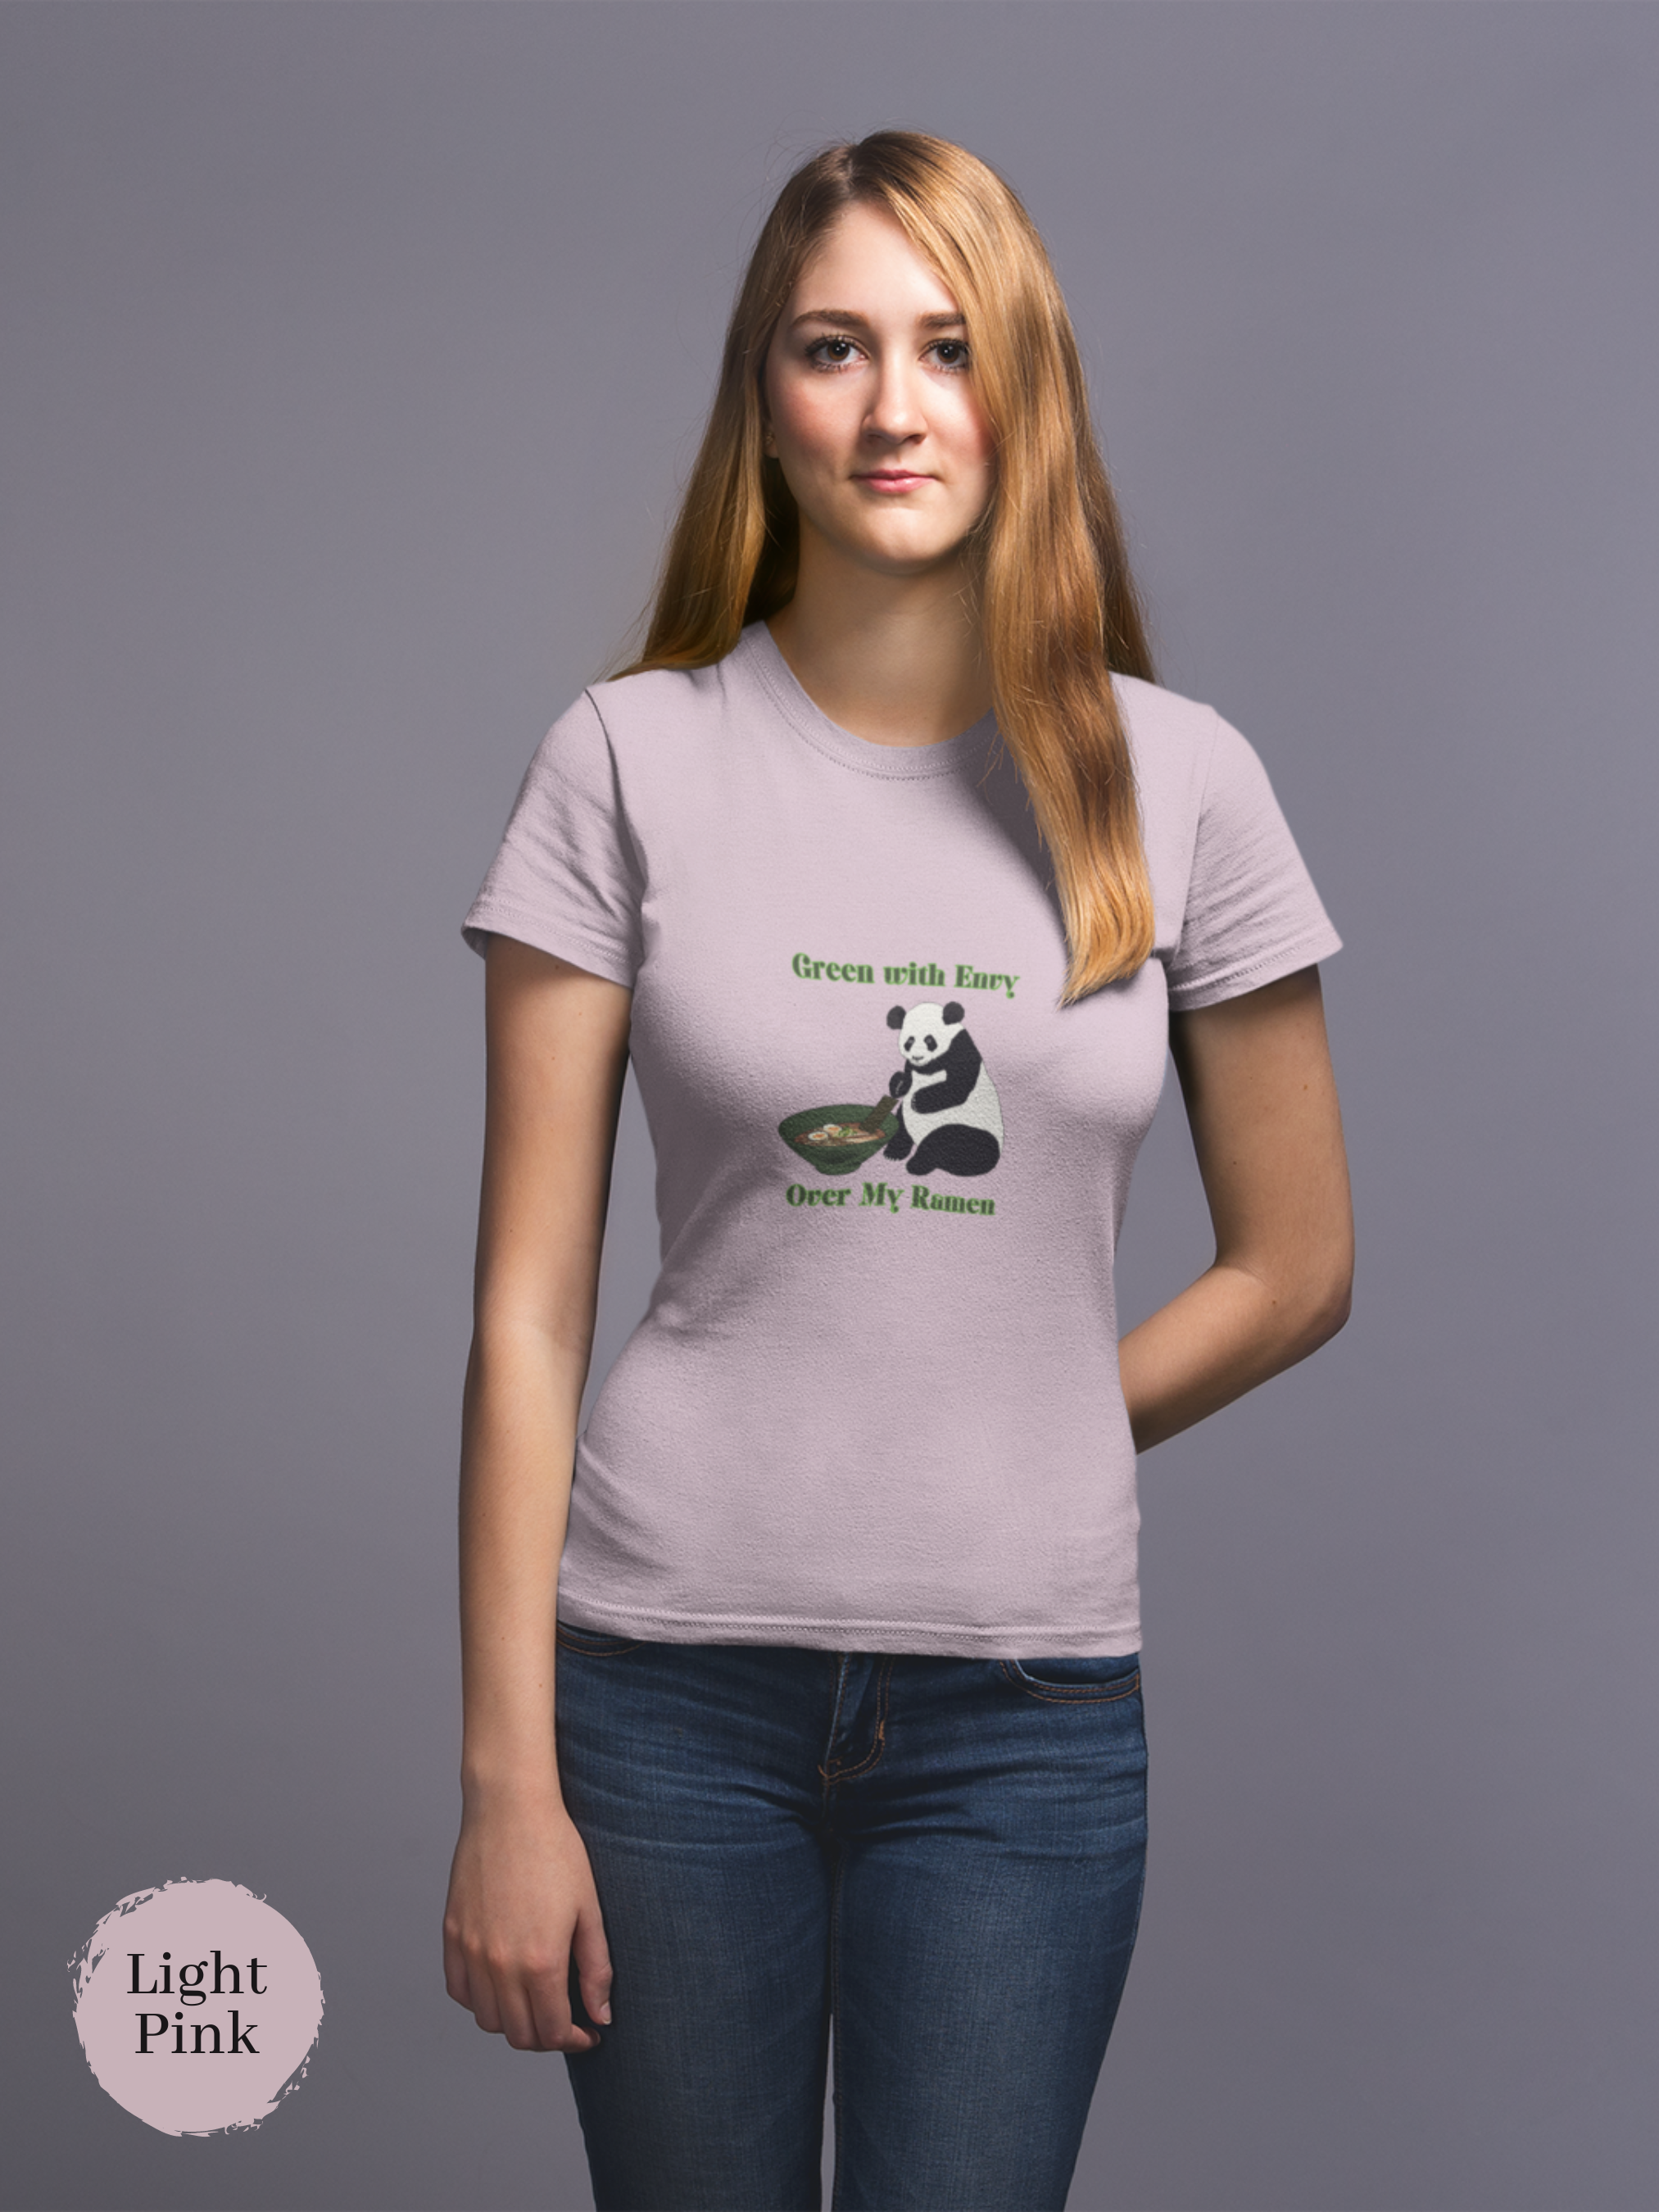 Ramen T-shirt: Green with Envy over My Ramen - Panda Edition - Japanese Foodie Shirt with Ramen Art